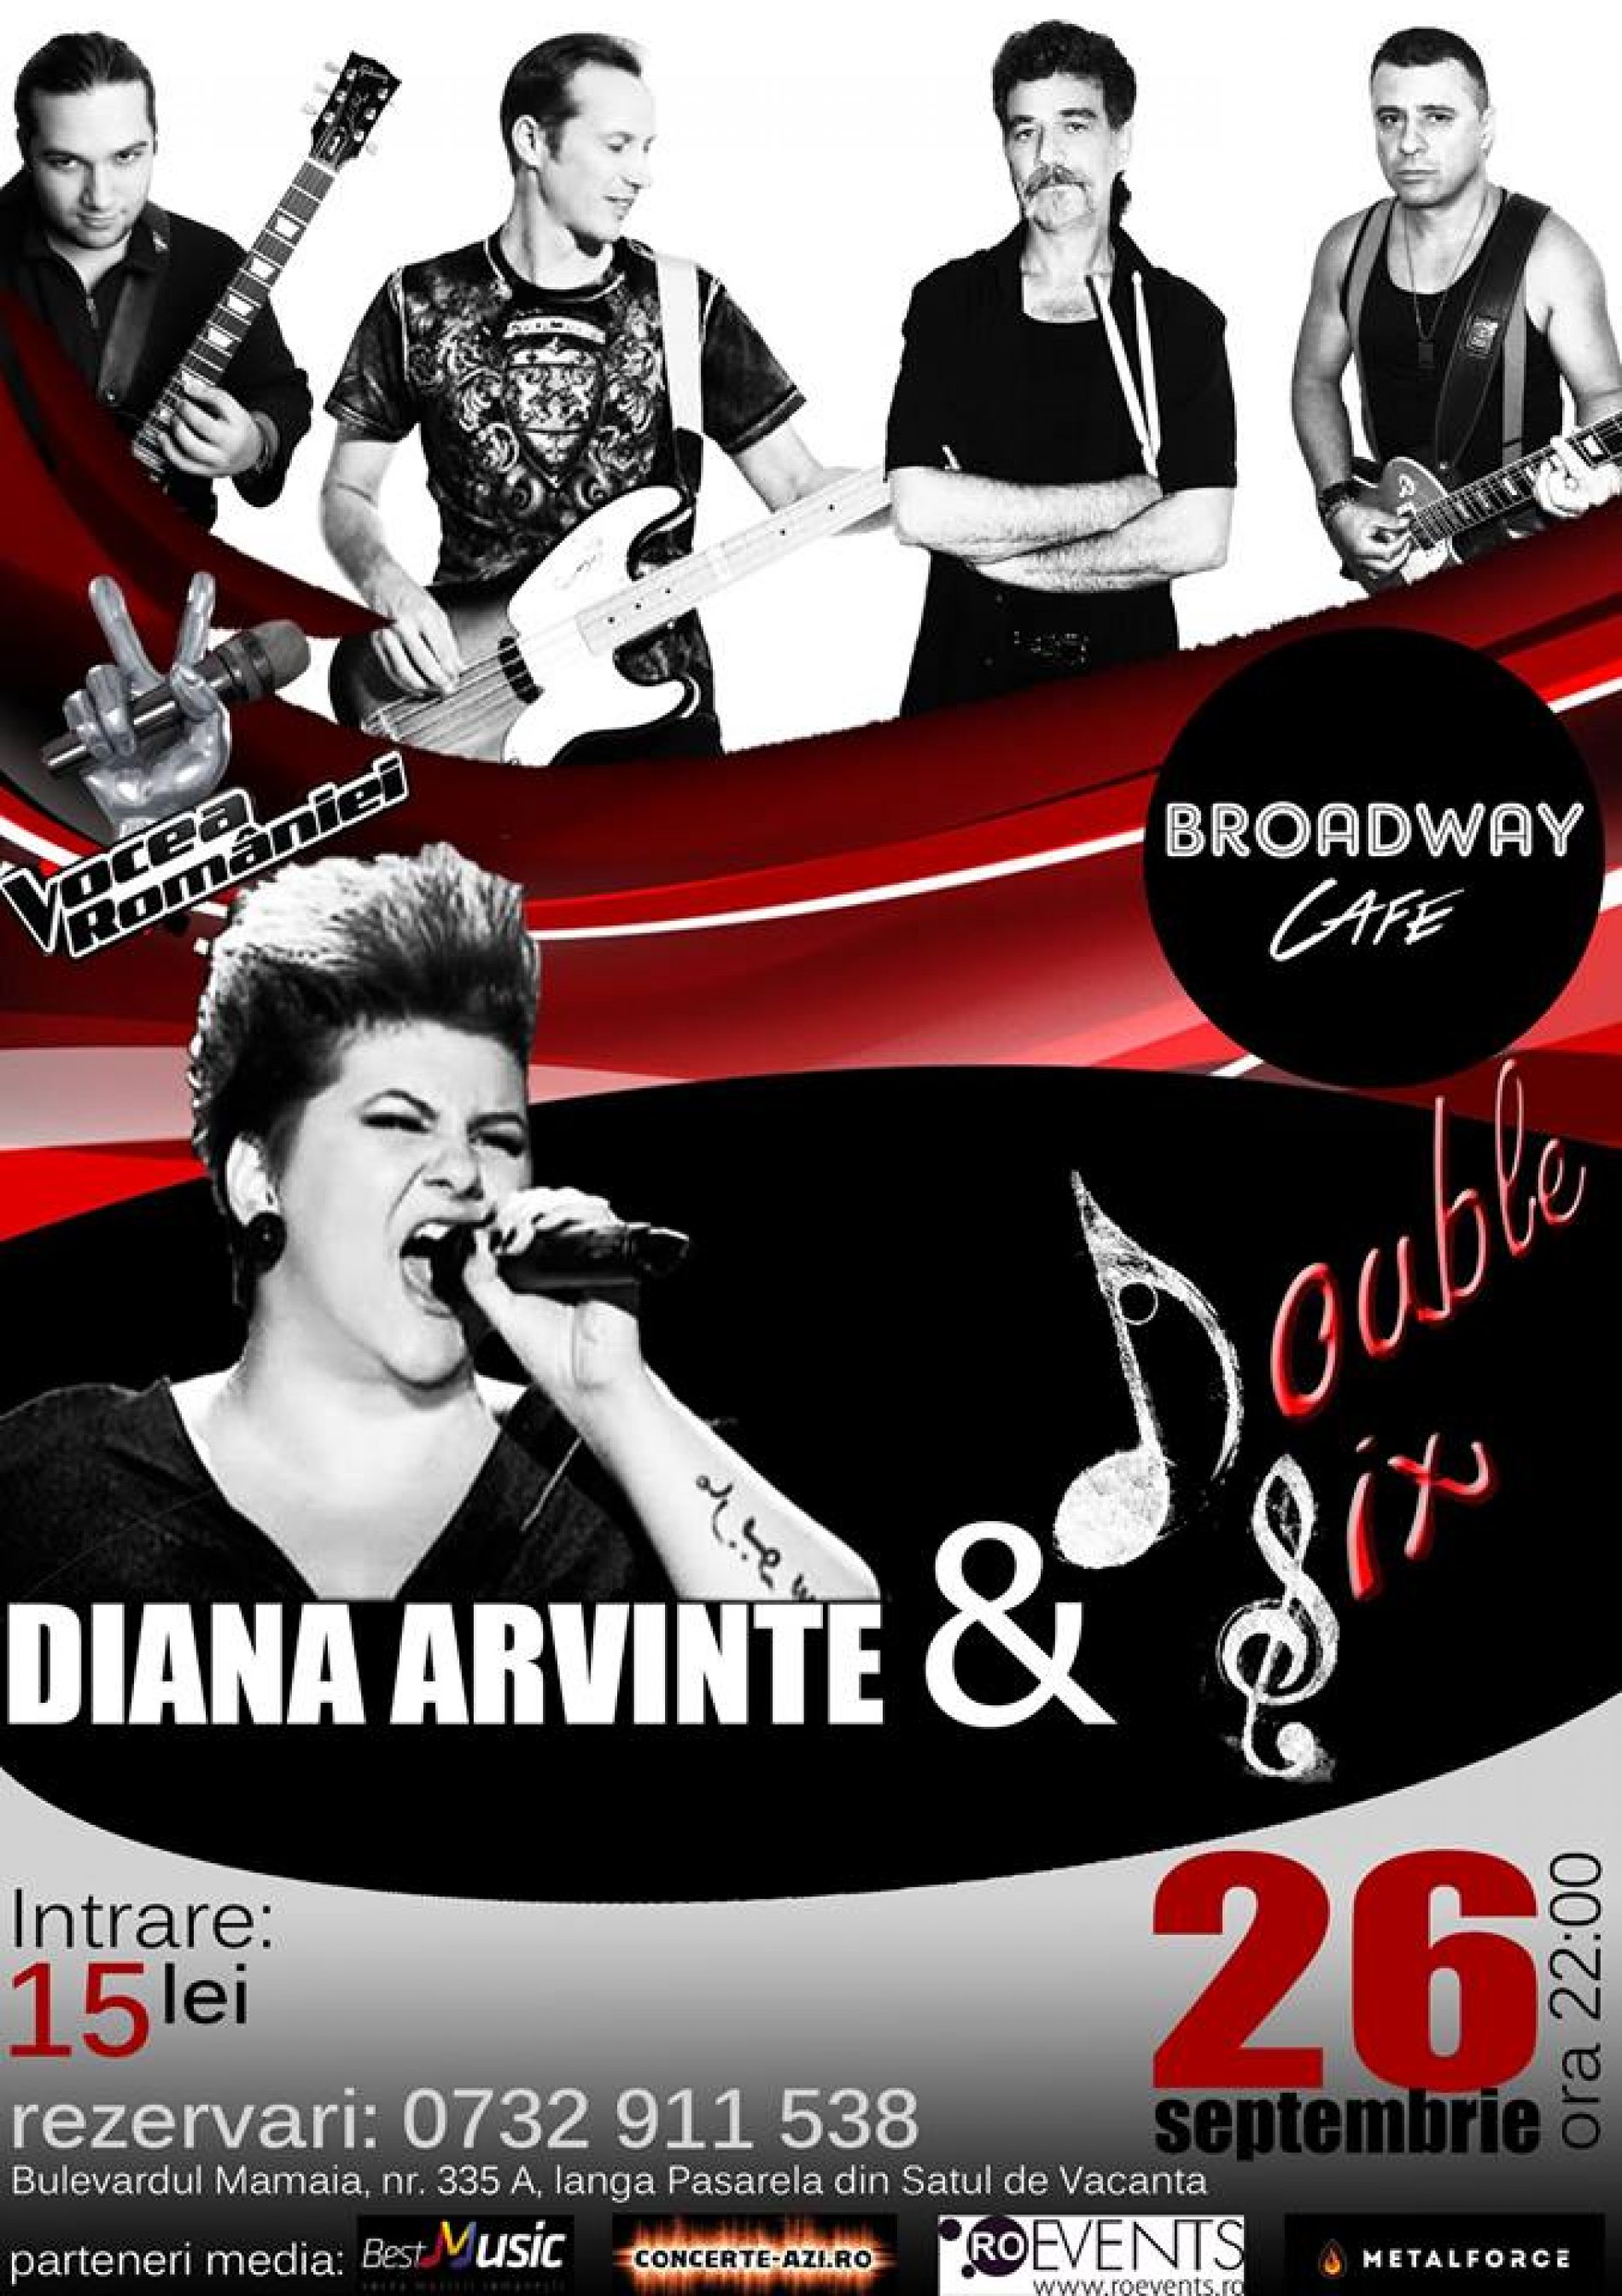 Concert pop-rock cu Diana Arvinte & Double Six in Broadway Cafe